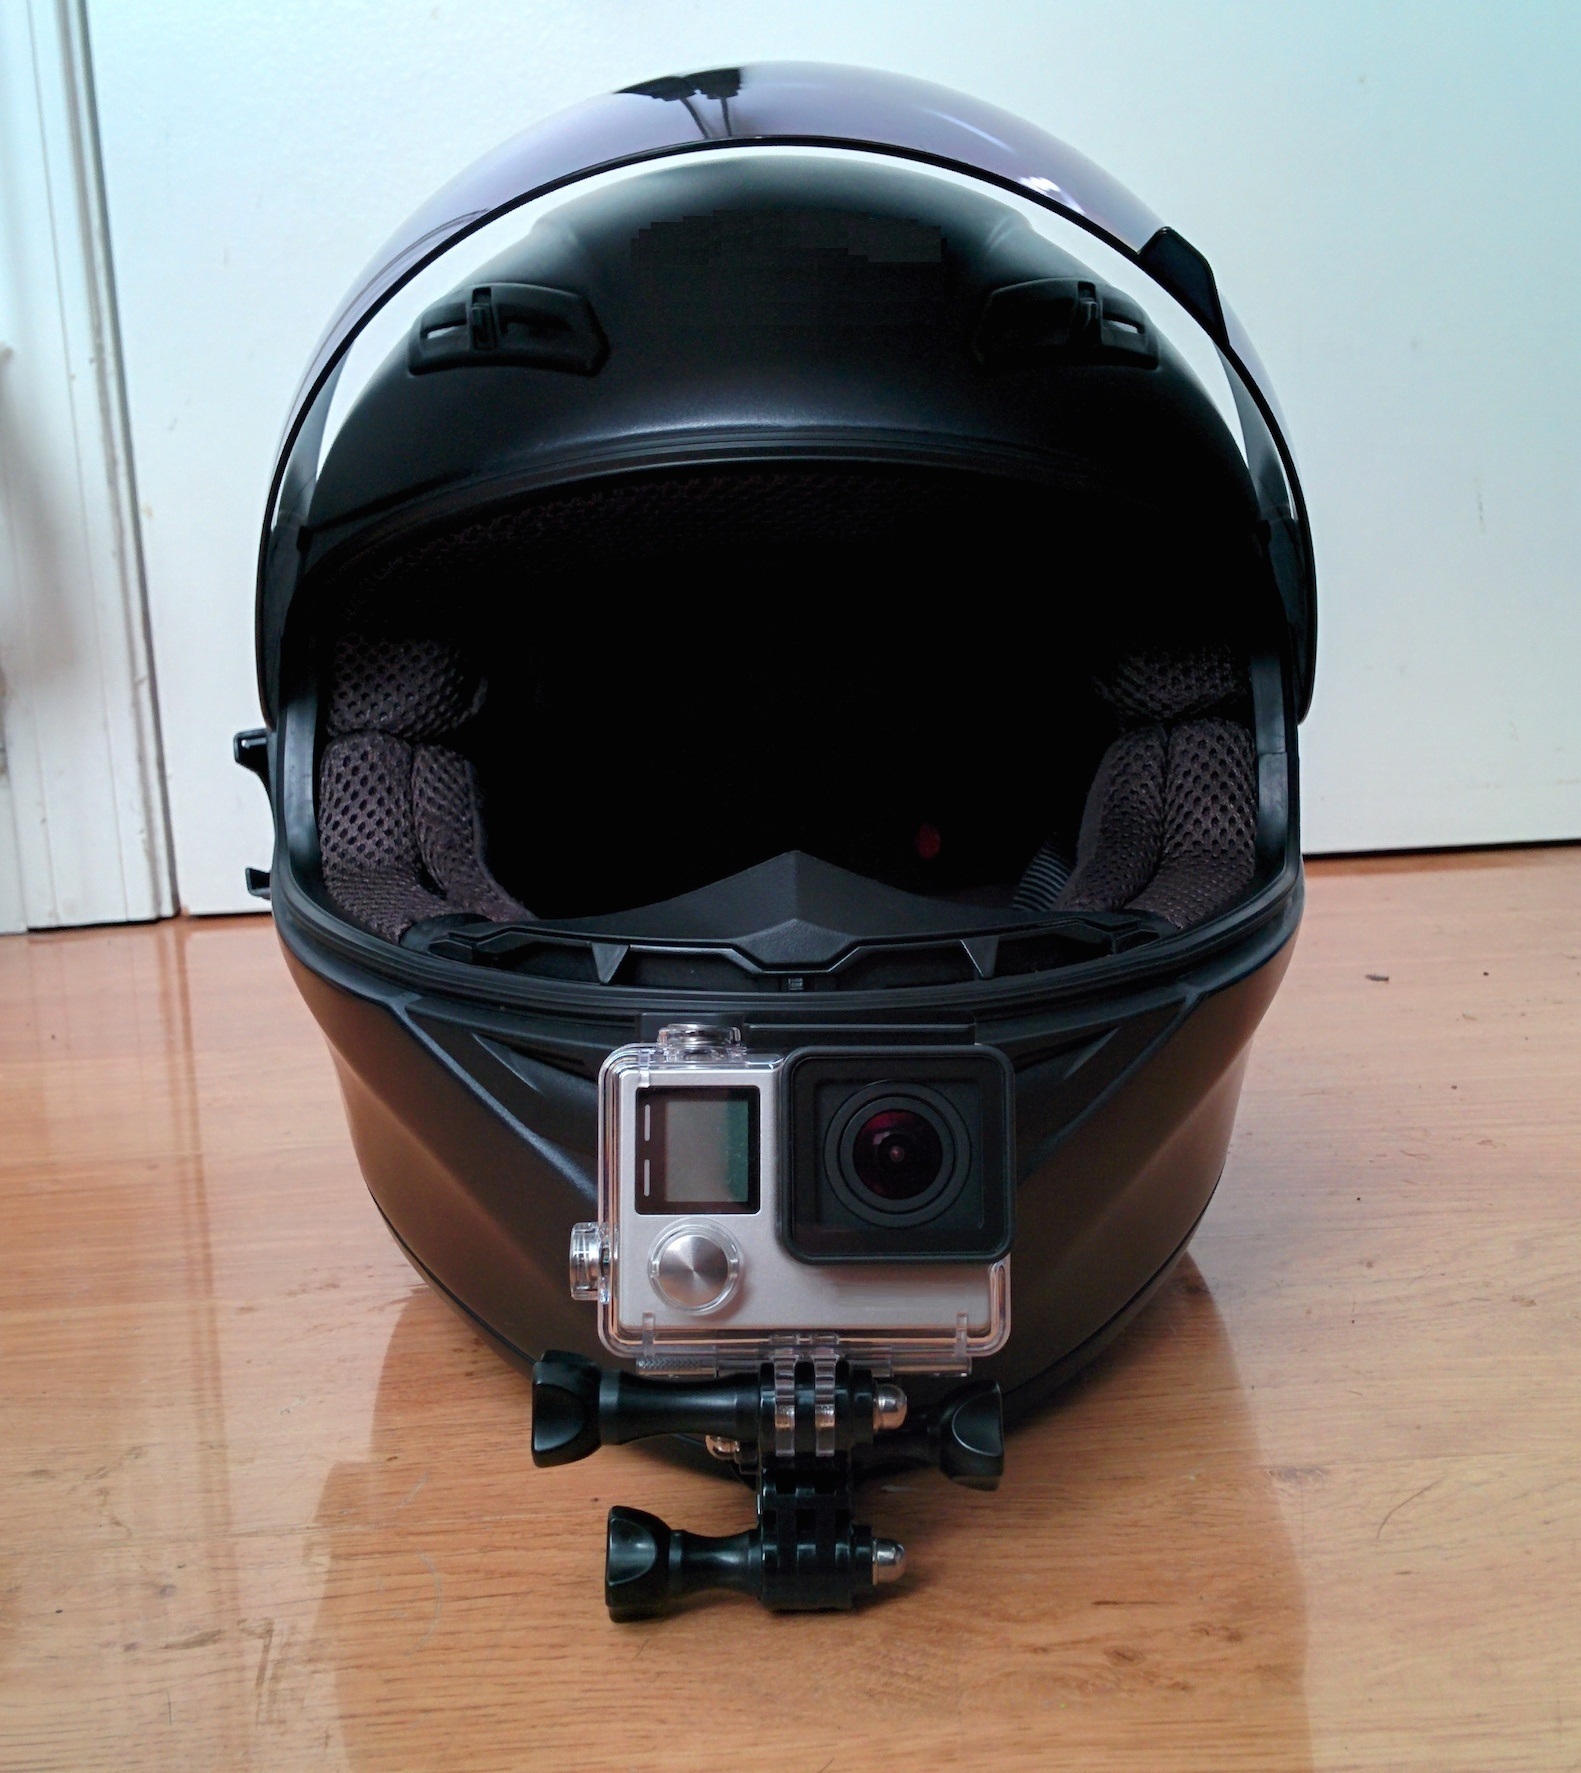 Купить камеру на шлем. Крепление GOPRO на шлем модуляр. GOPRO на шлем военный. GOPRO на шлем мотоцикла. Экшн камера на шлем мотоцикла.